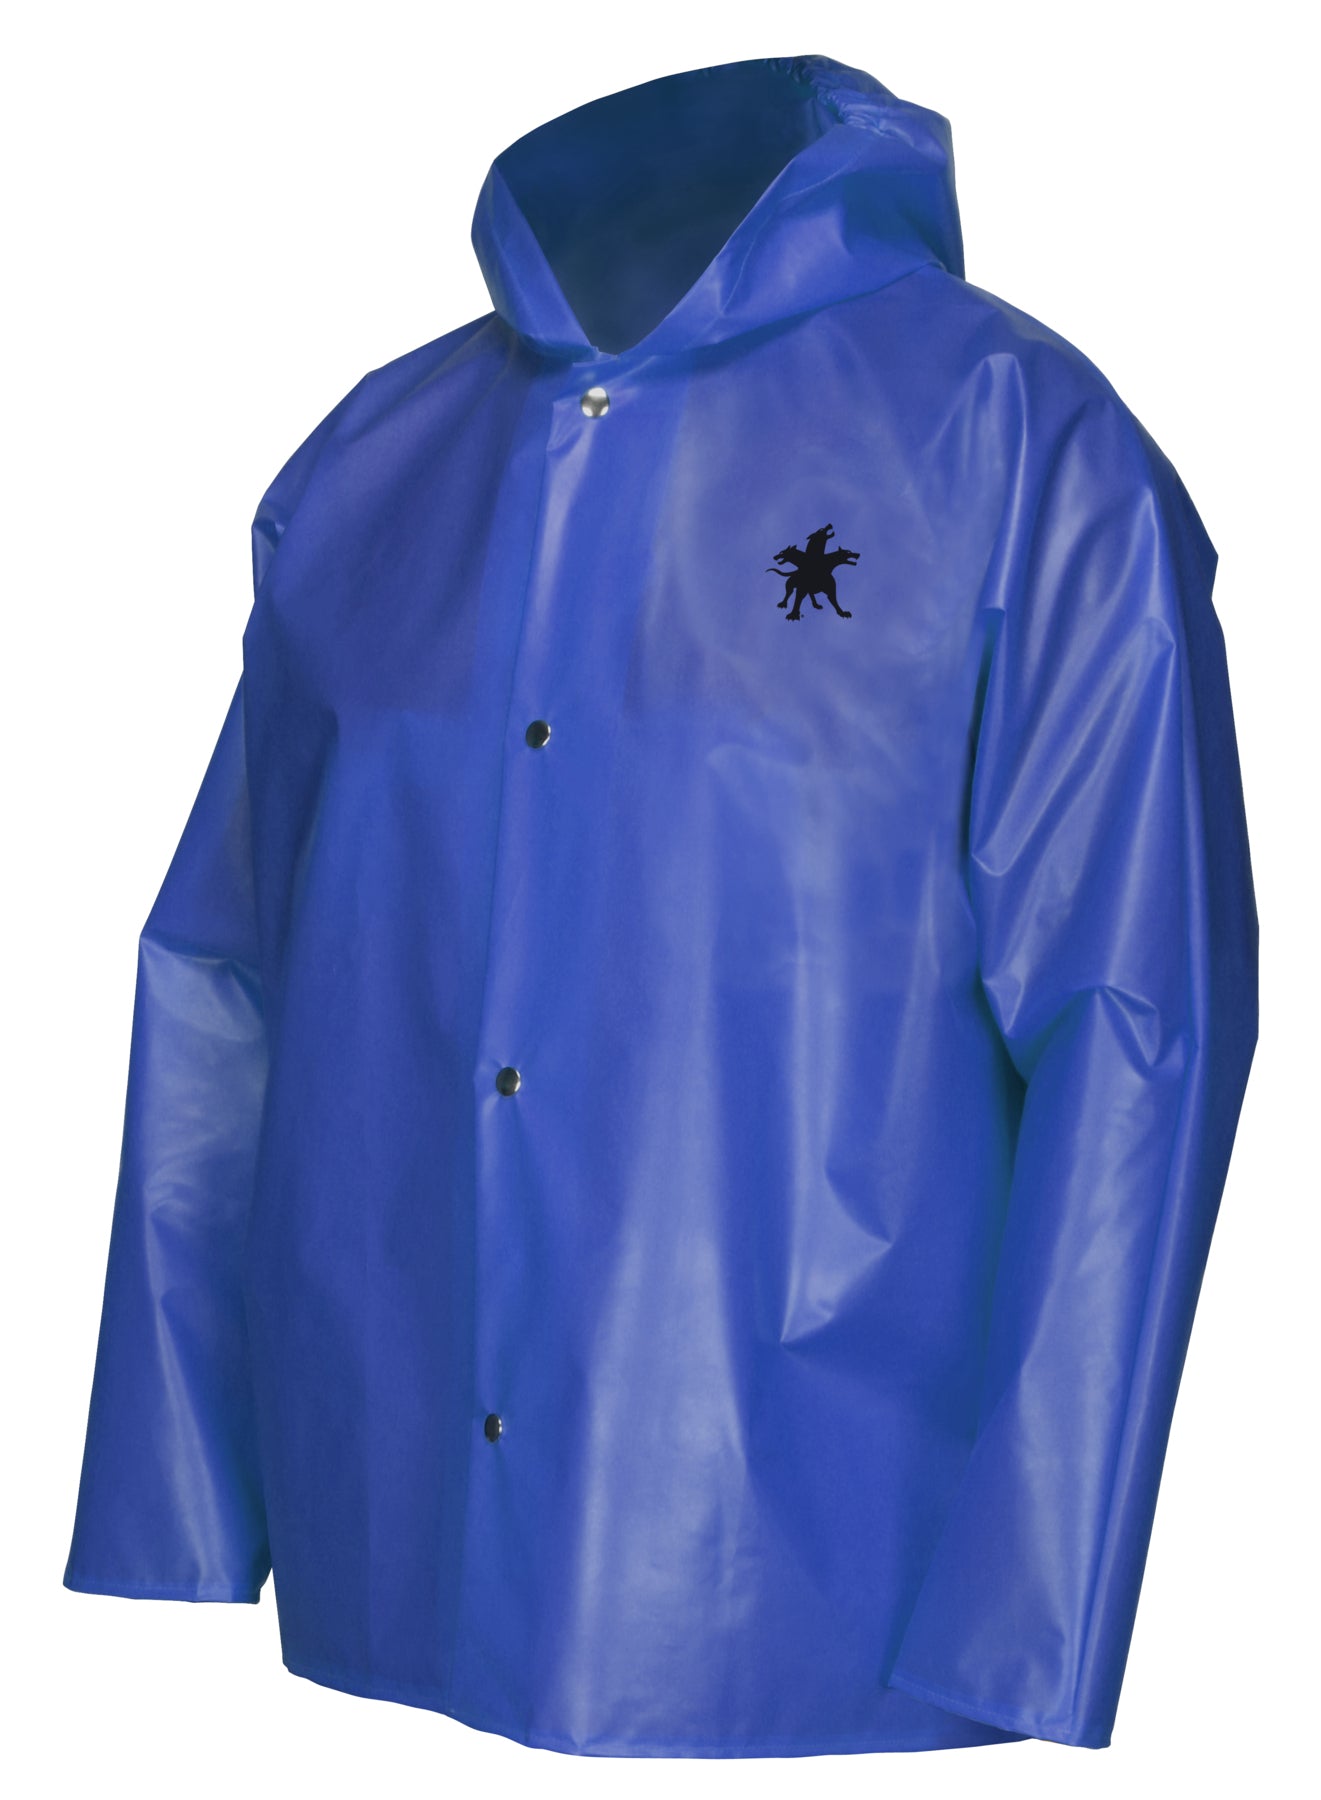 563JH - Navigator Series Rain Jacket w/Attached Hood Blue